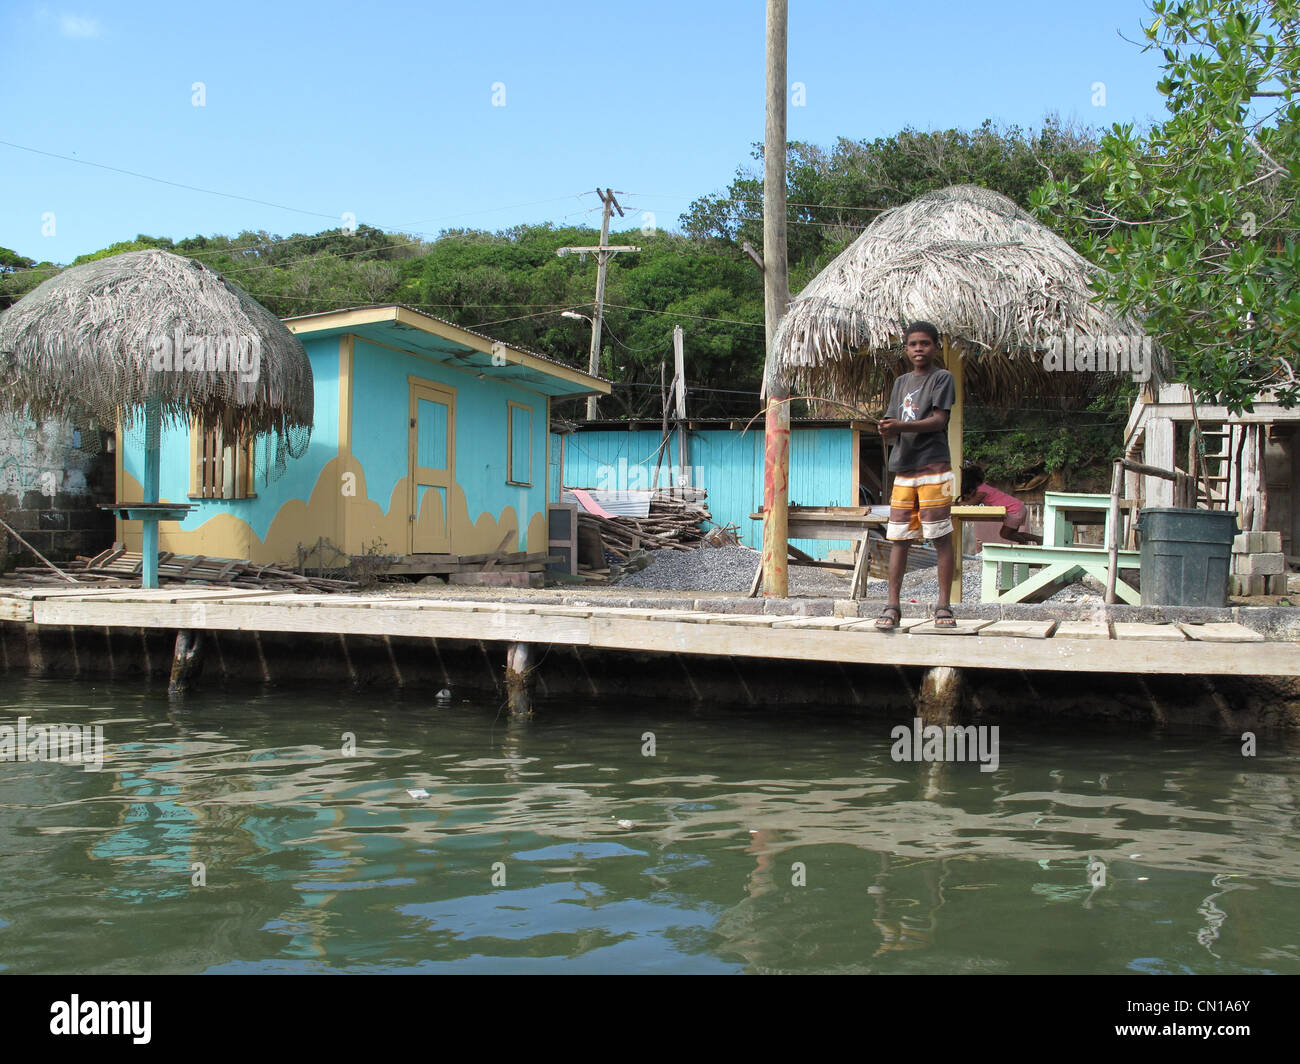 Chico pesca en Jonesville, Roatán, Islas de la Bahía, Honduras Foto de stock